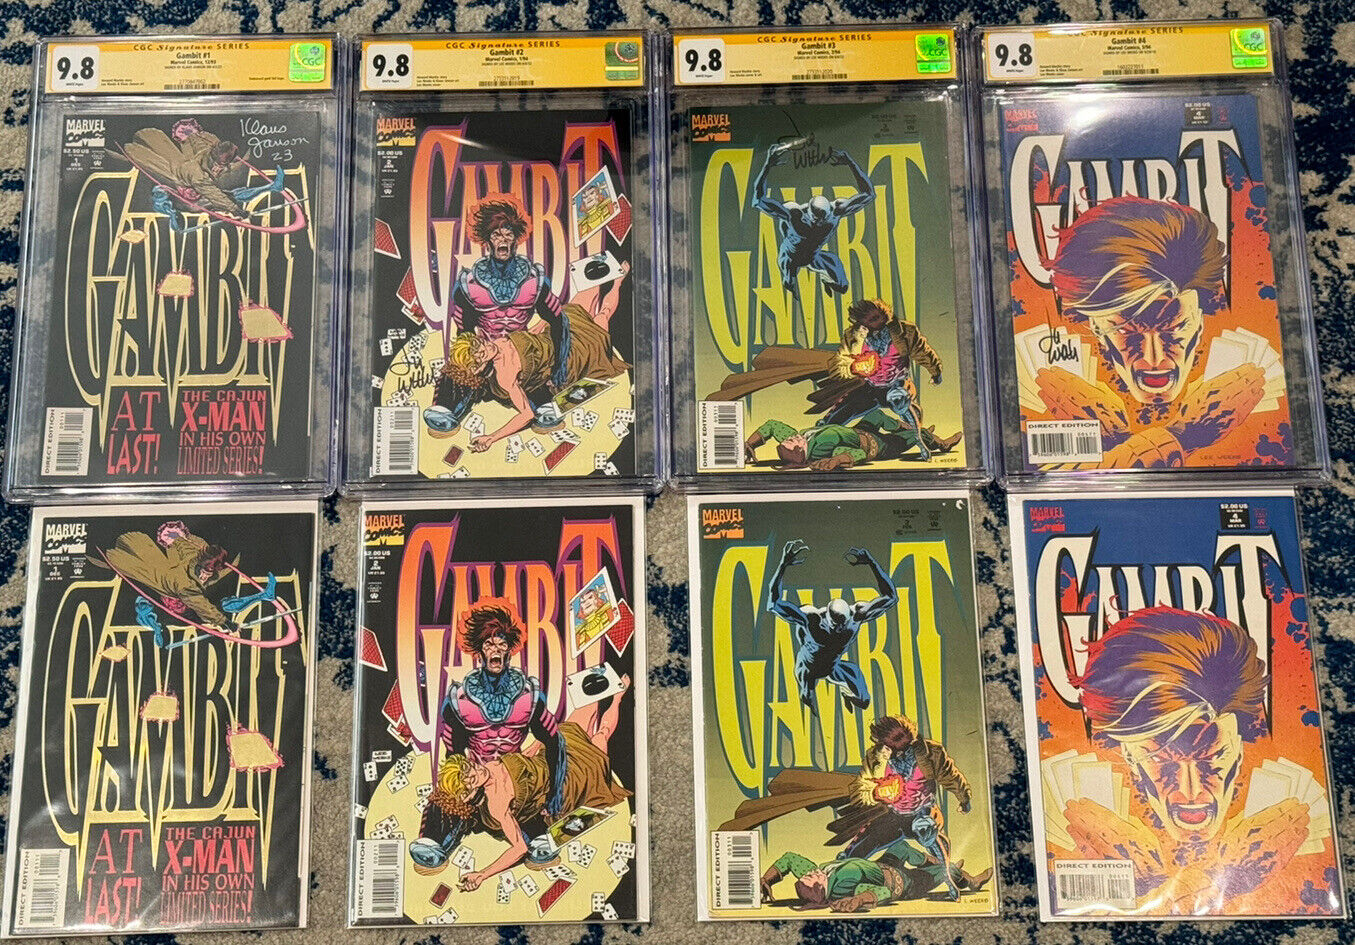 GAMBIT #1-4 (1994) CGC 9.8 ss Signed #1 Janson, #2-#4 Weeks +(#1-4 raw copies)